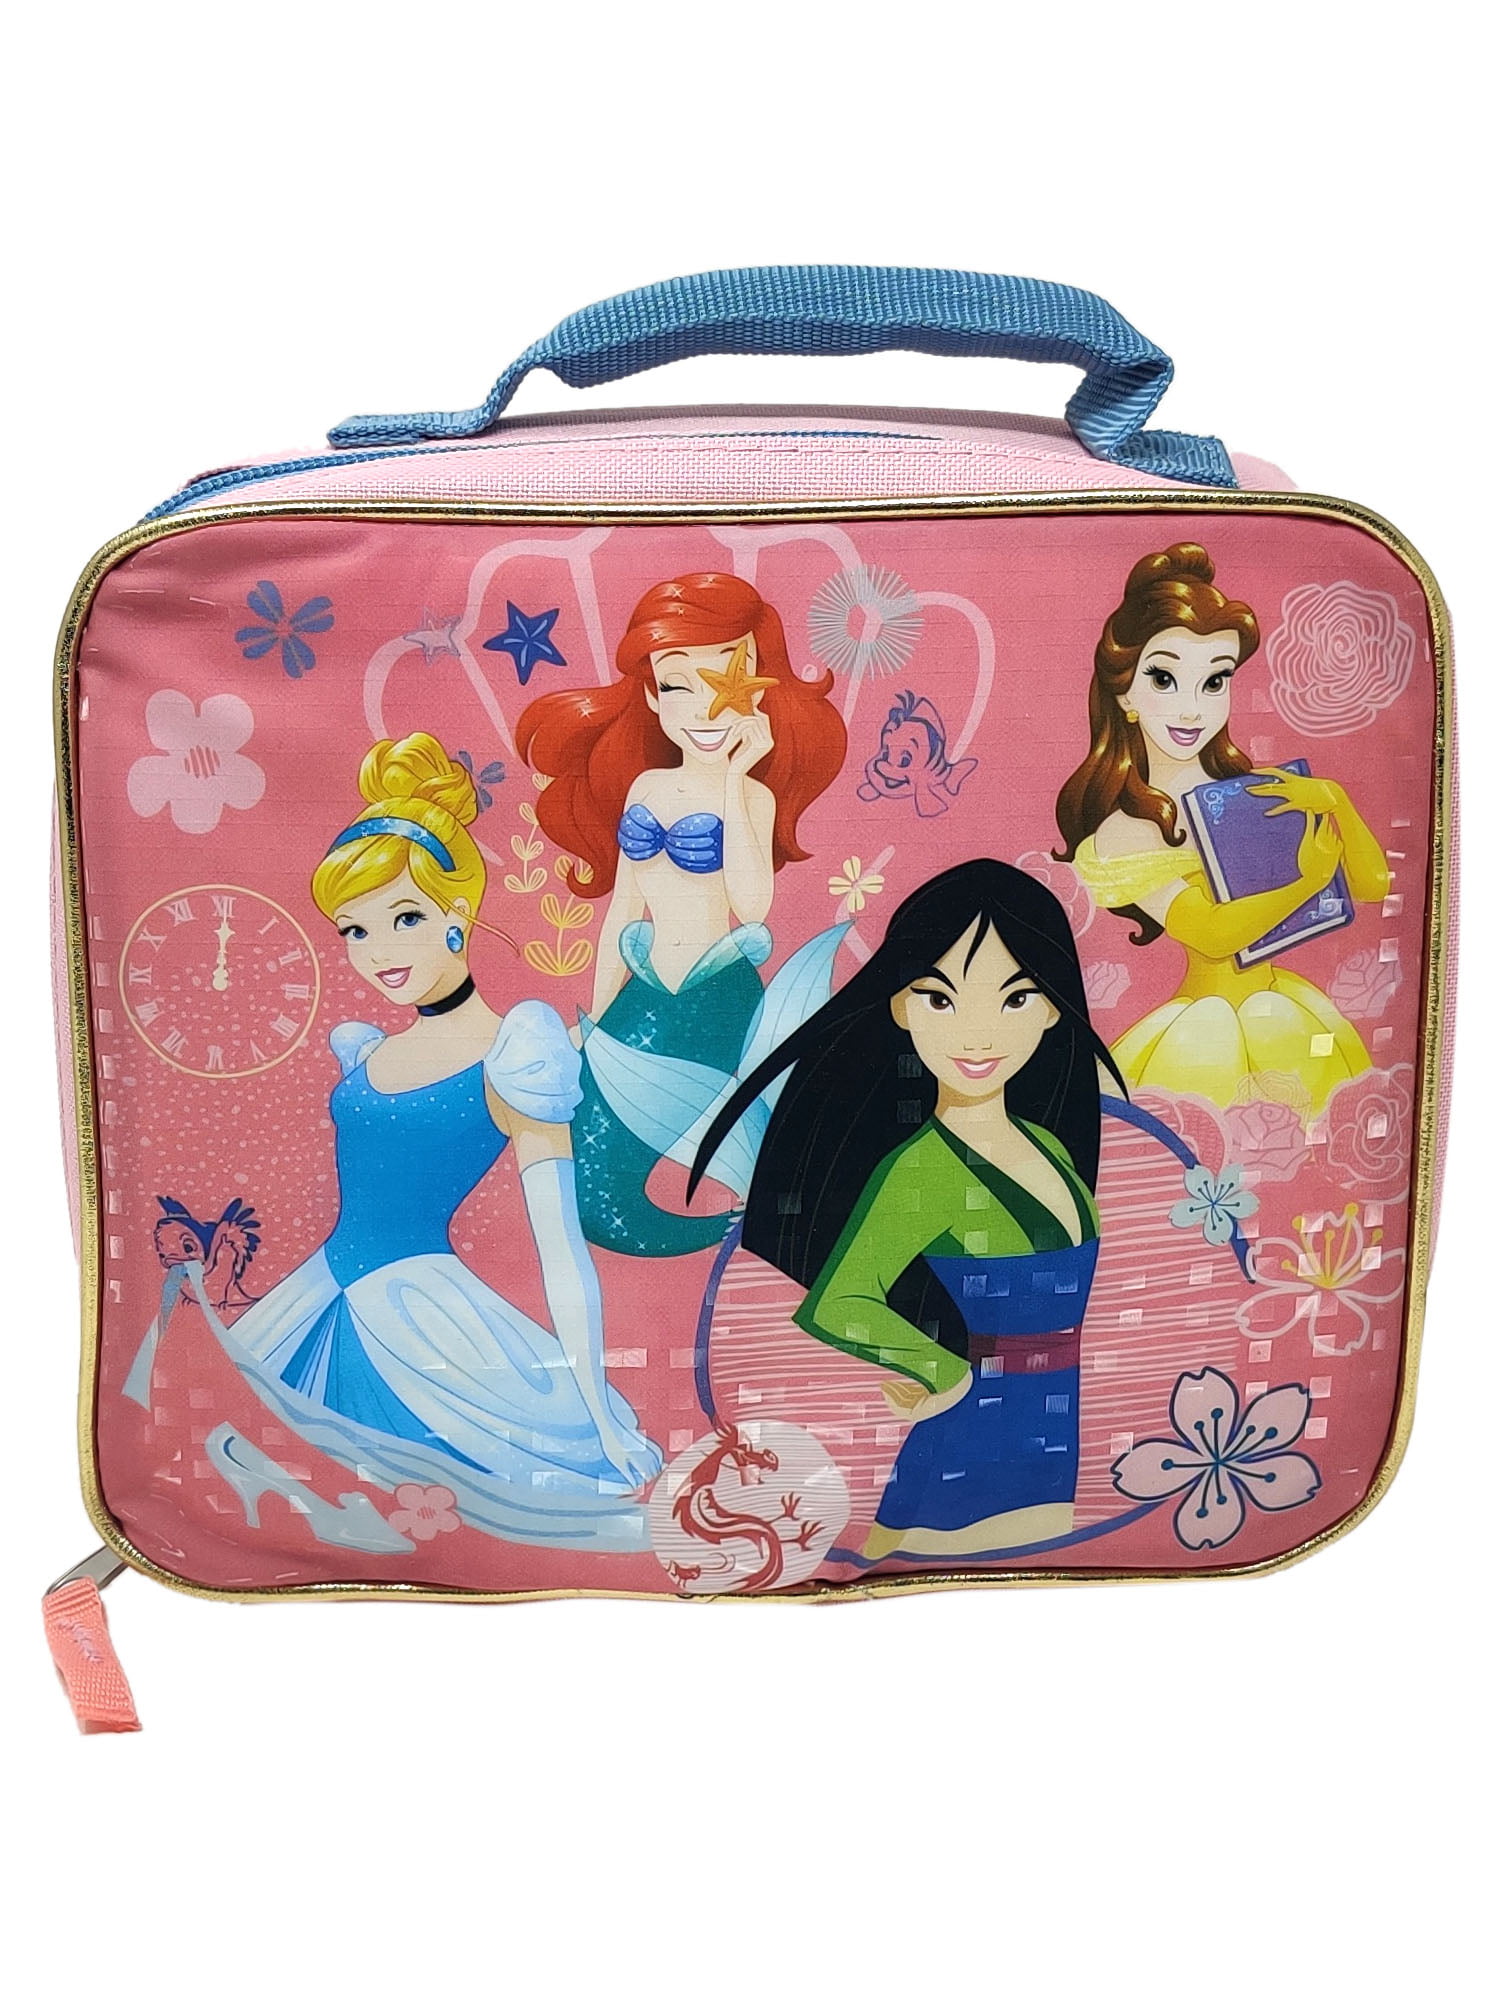 Trolls 4 Pack Girls Bag Set Featuring Disney Princesses Minnie Mouse and Frozen with Disney Princess Stickers Girls School Supplies Bulk Bundle Girls Accessories Bag 